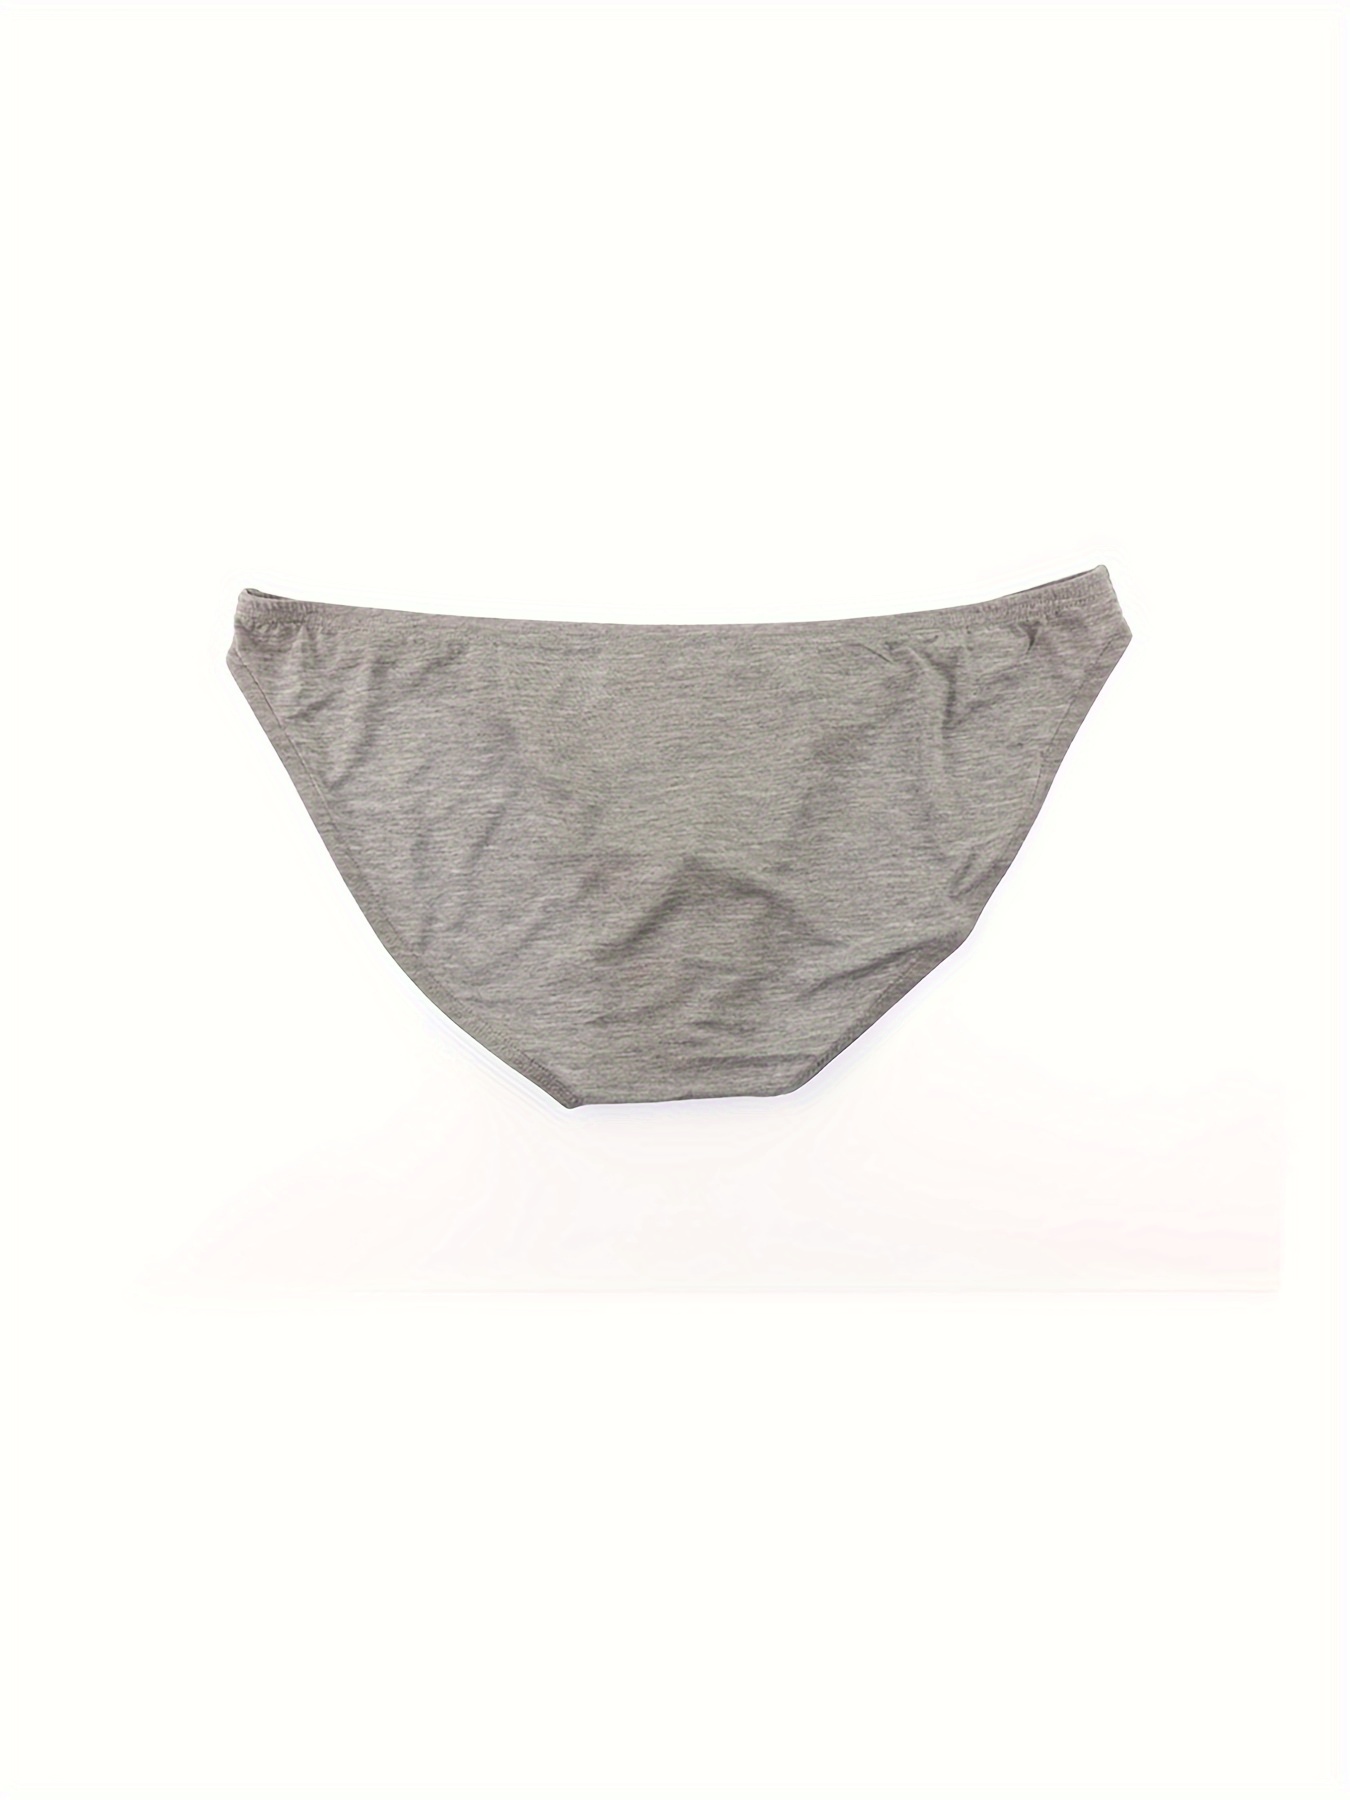 Men's Comfy Tanga Briefs Sexy Bulge Pouch Panties Cotton Bikini Underwear